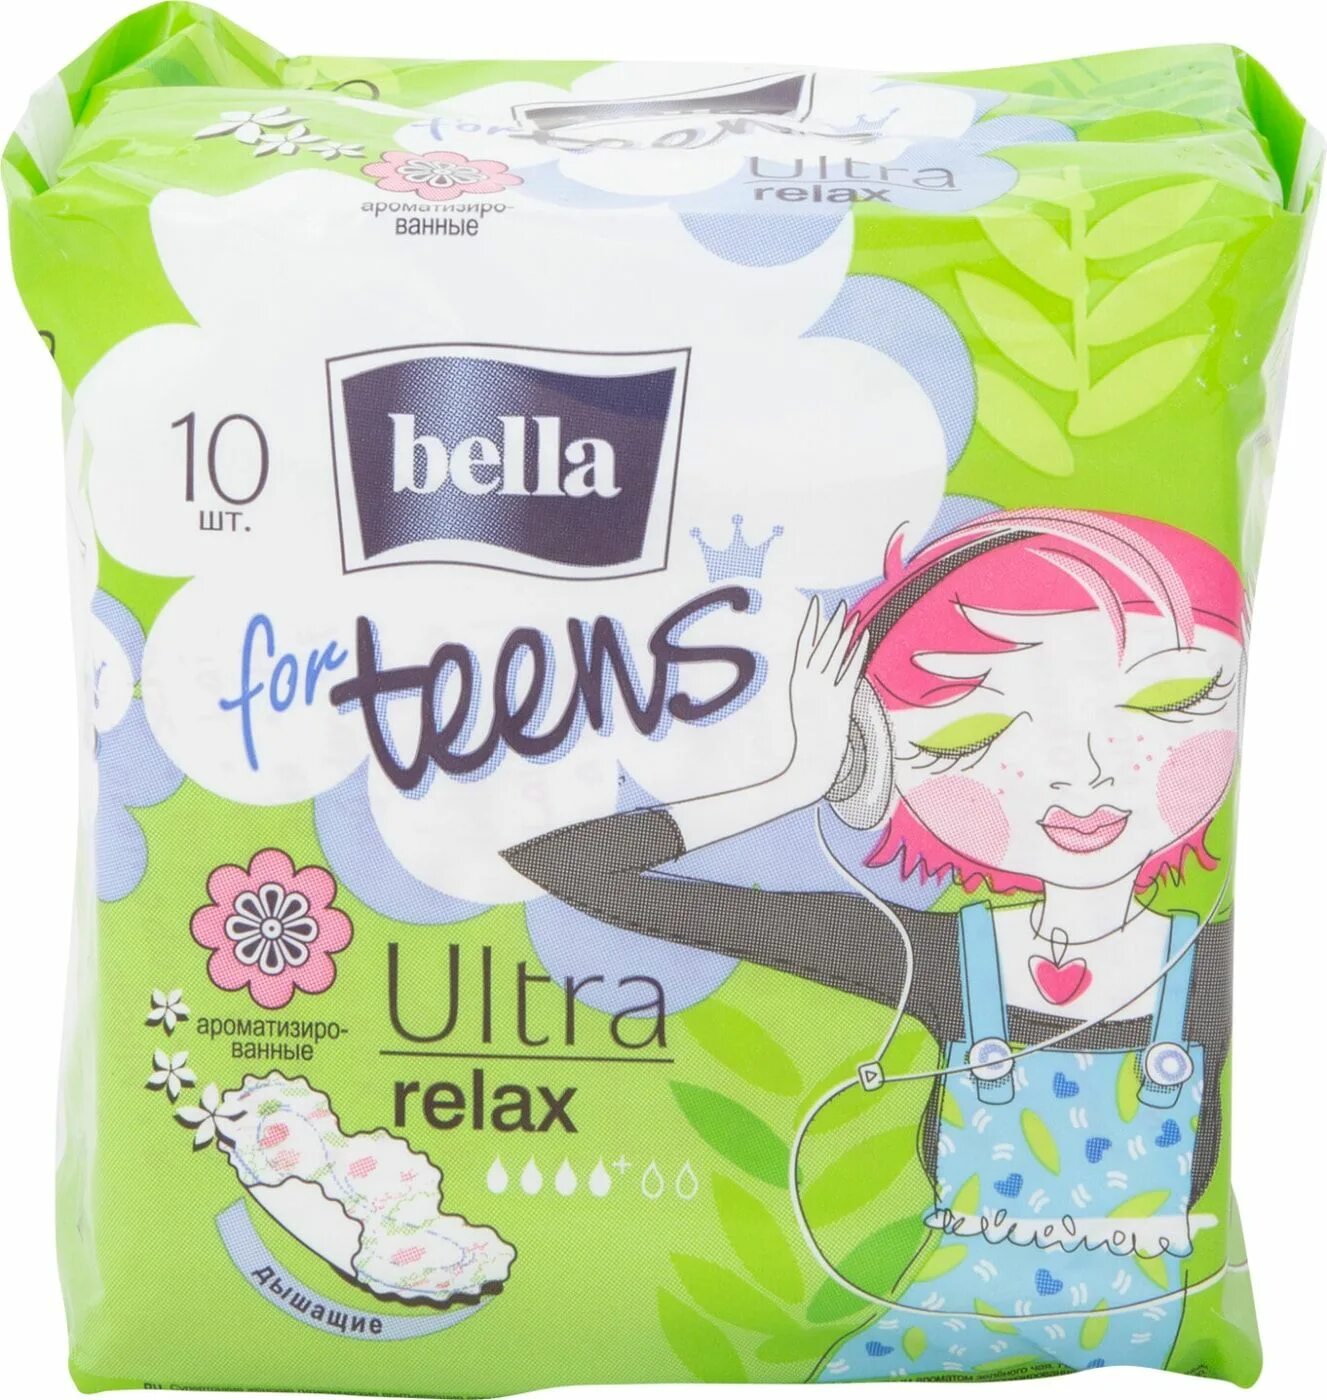 Прокладки Bella for teens 10шт. Bella прокладки for teens Energy(rw10-260)10шт. Always teen